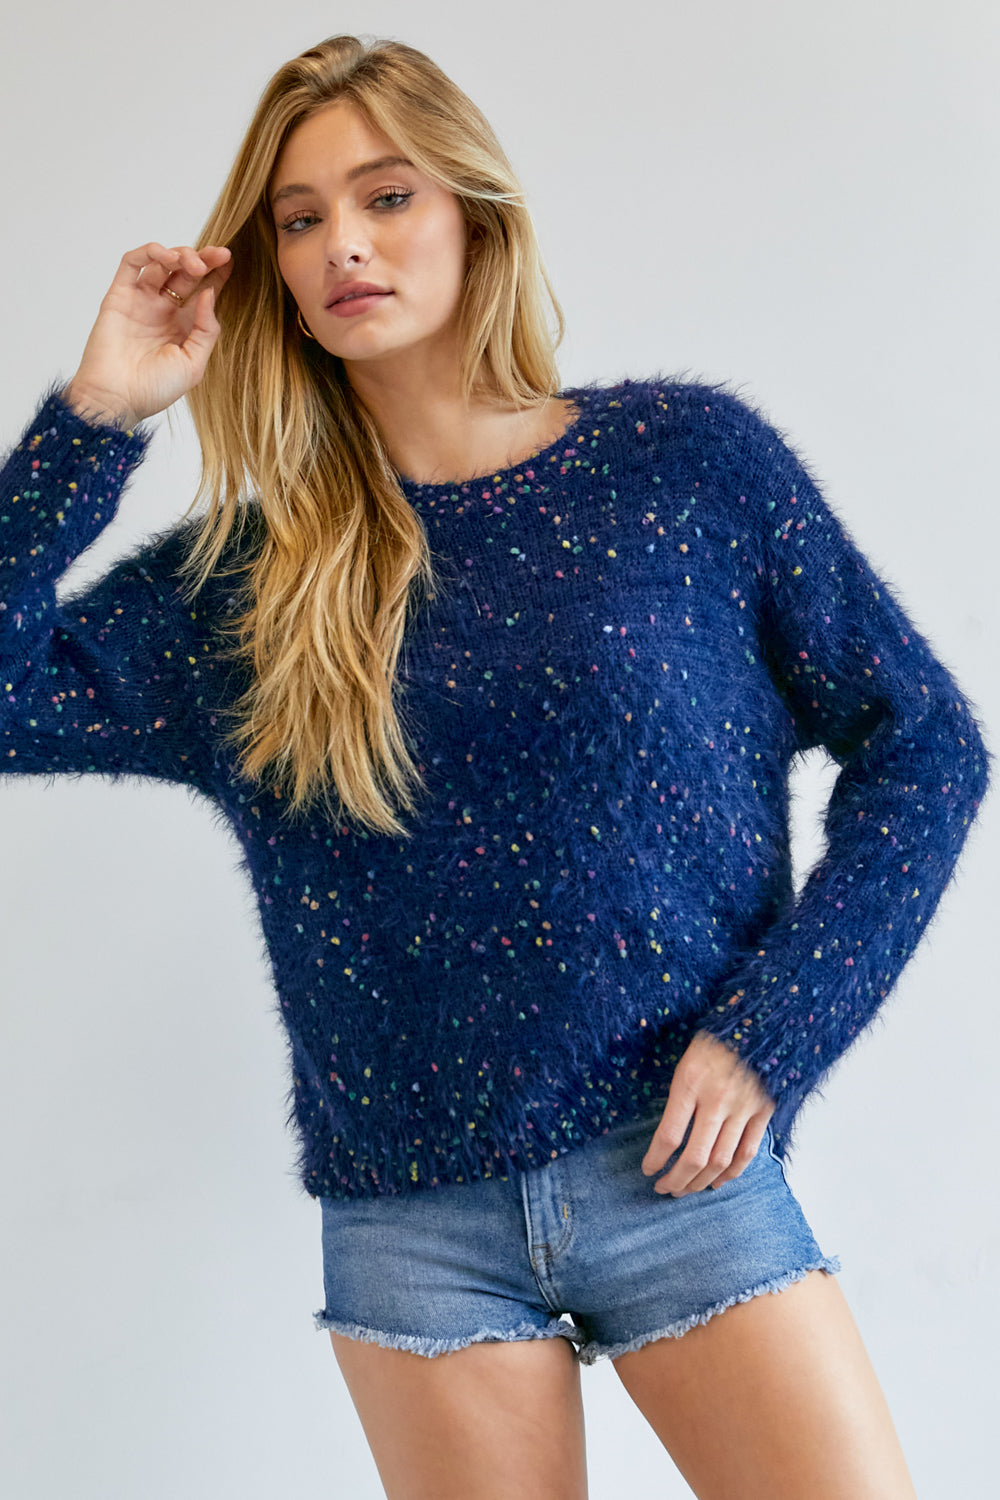 Davi & Dani Multi Color Polka Dot Sweater - Navy Shirts & Tops RYSE Clothing Co.   